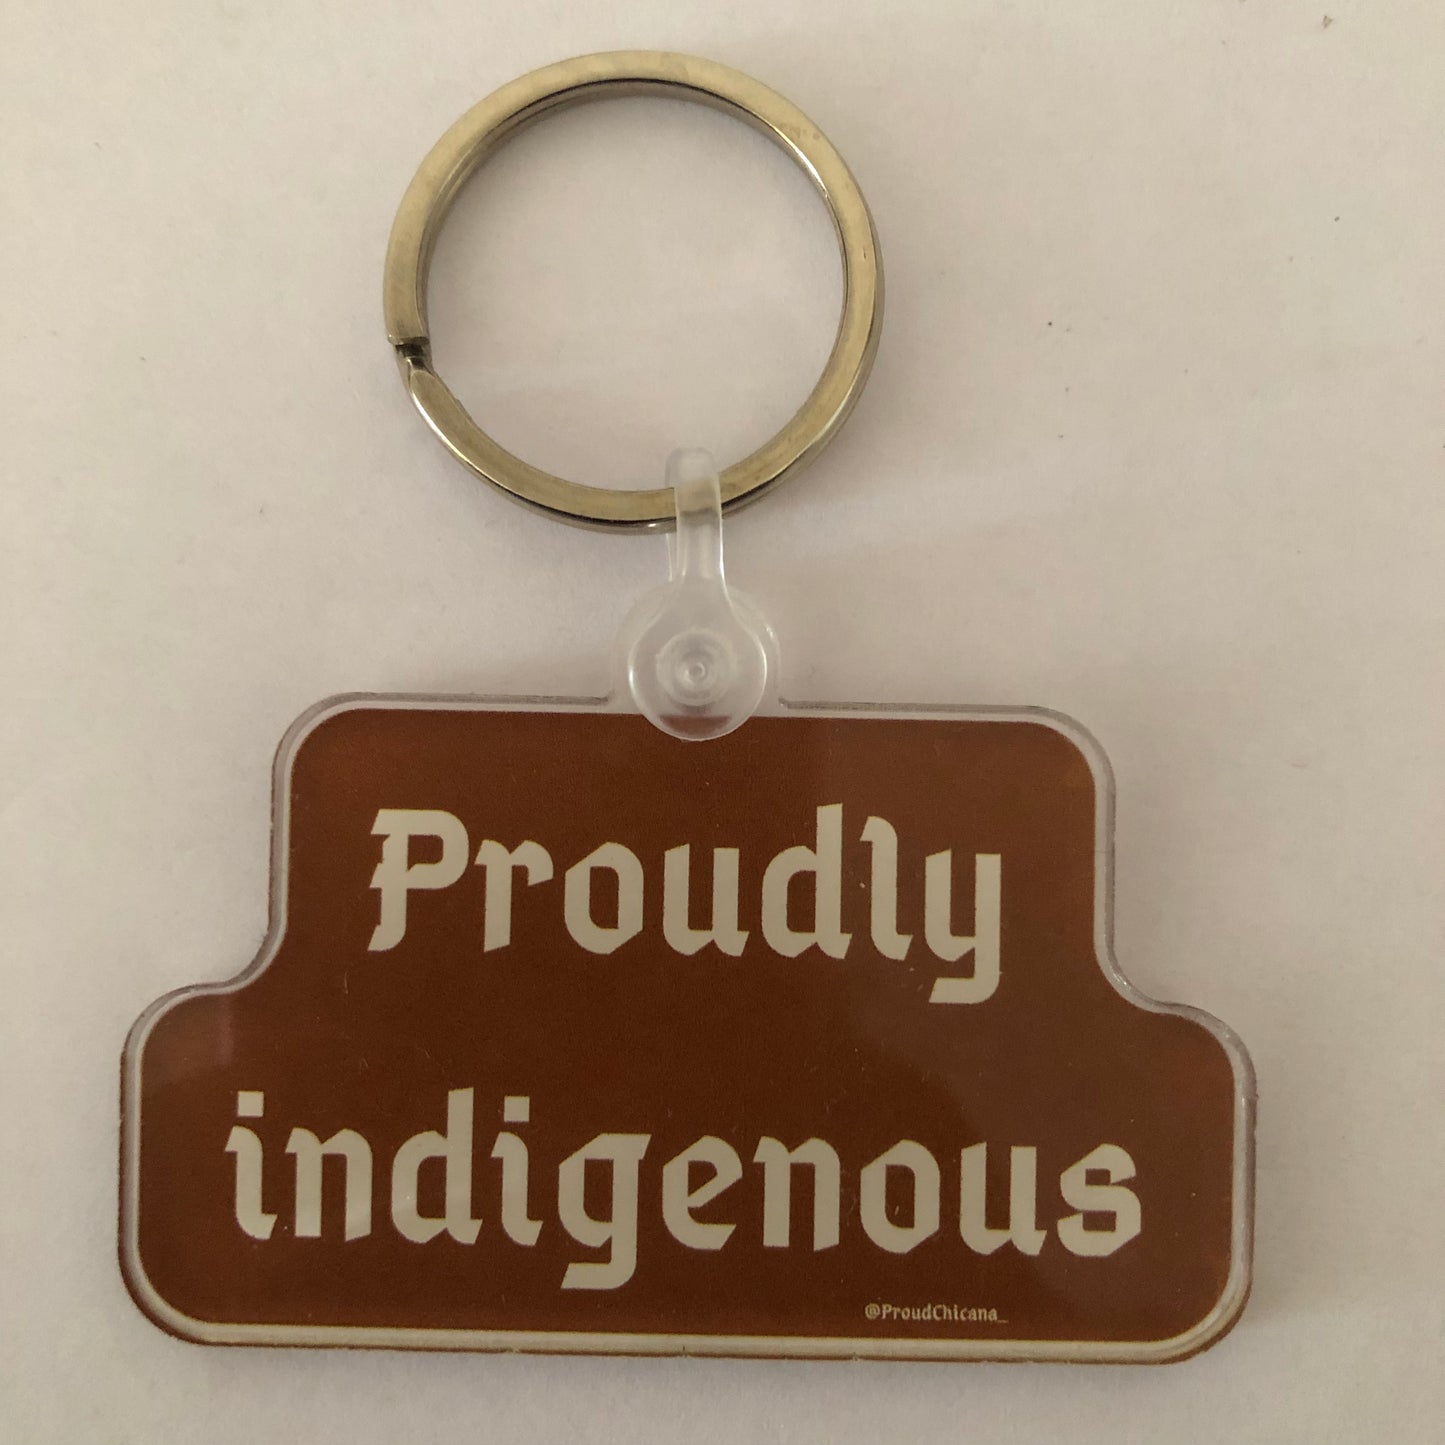 Proudly indigenous keychain